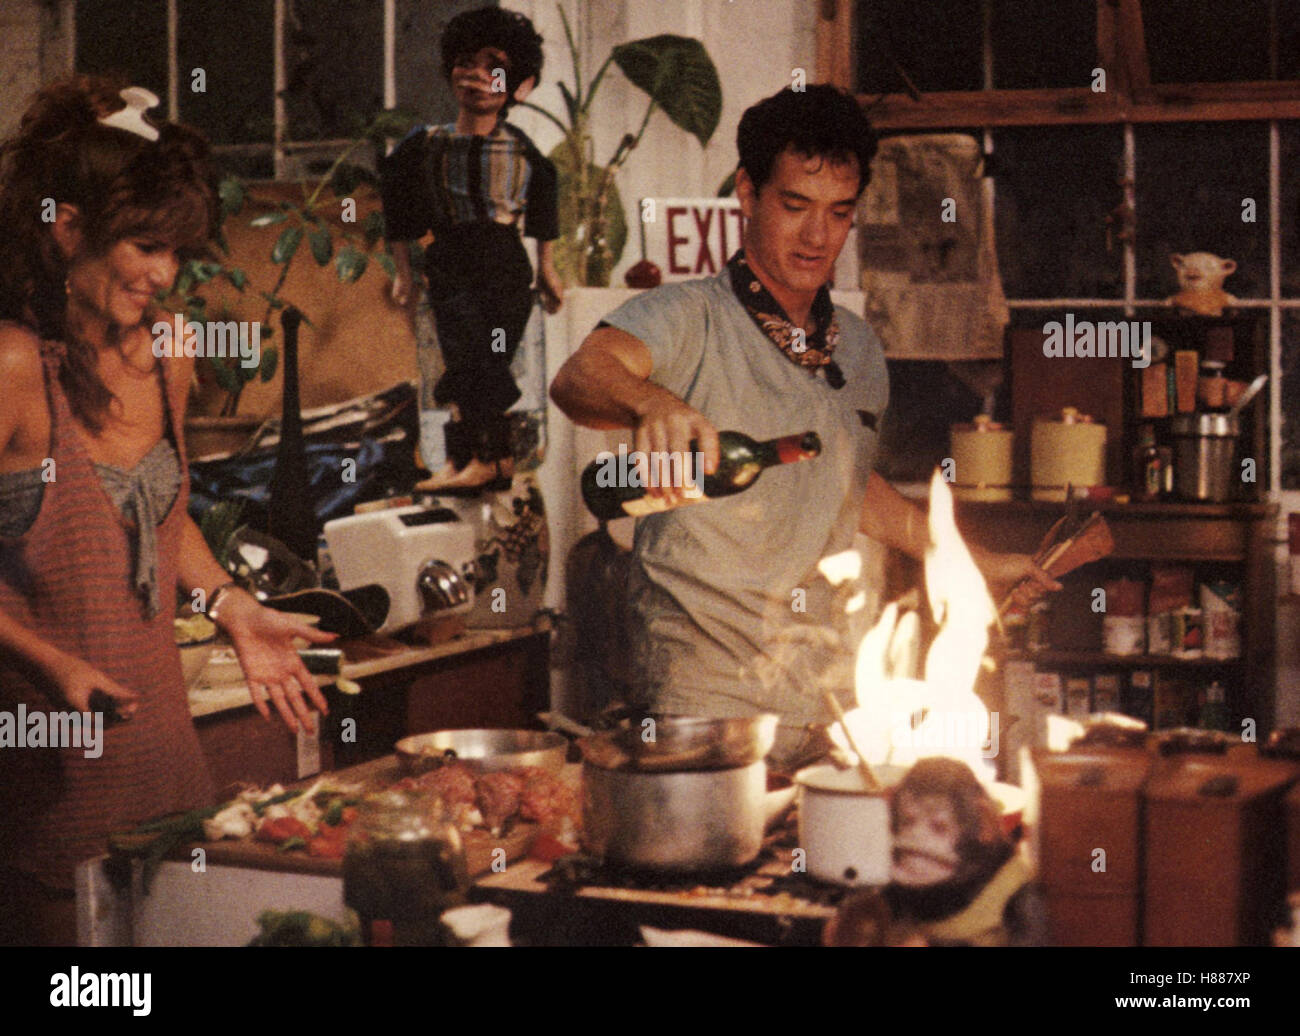 Bachelor Party, (BACHELOR PARTY) USA 1984, Regie: Neal Israel, TAWNY KITAEN, TOM HANKS, Stichwort: Küche, Flambieren, Feuer, Flamme, Kochen Stock Photo